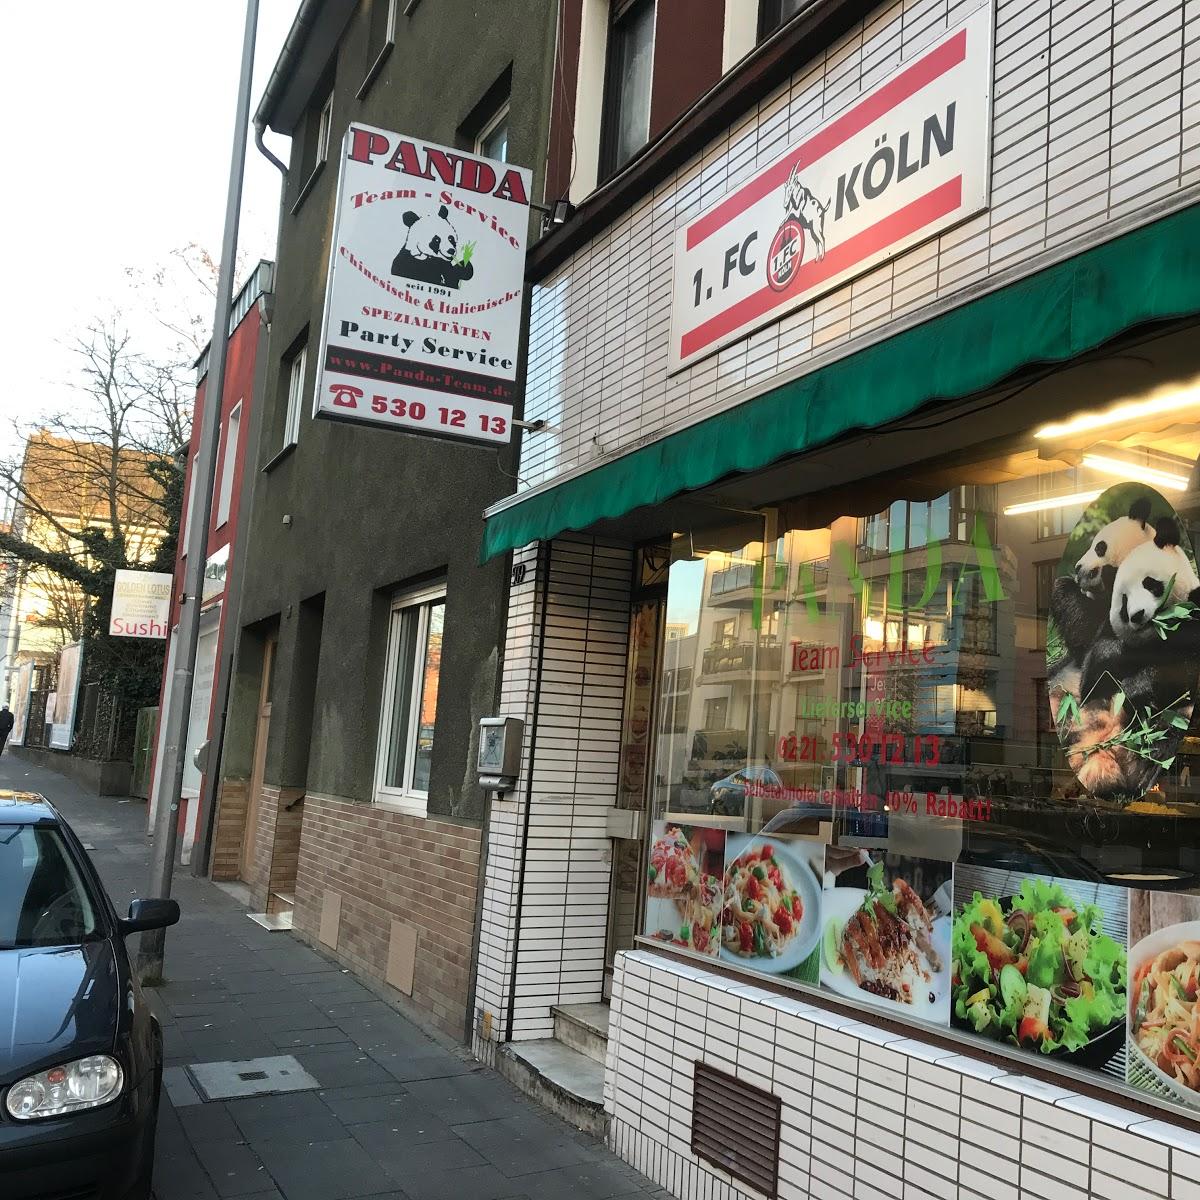 Restaurant "Panda Imbiss Lieferservice" in Köln